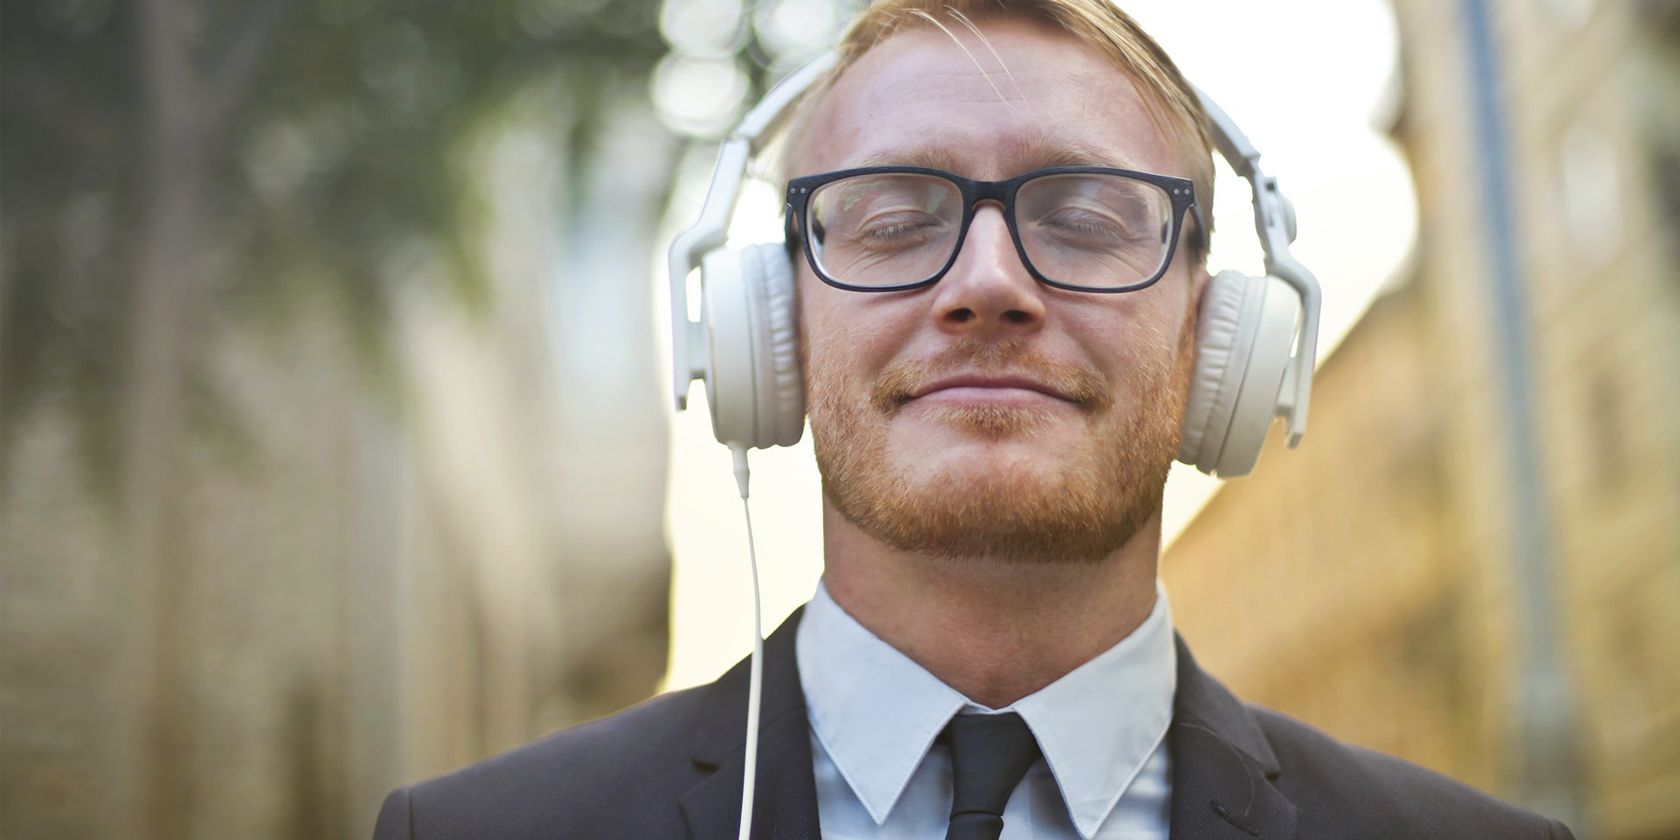 A man in formal wear enjoying music on headphones